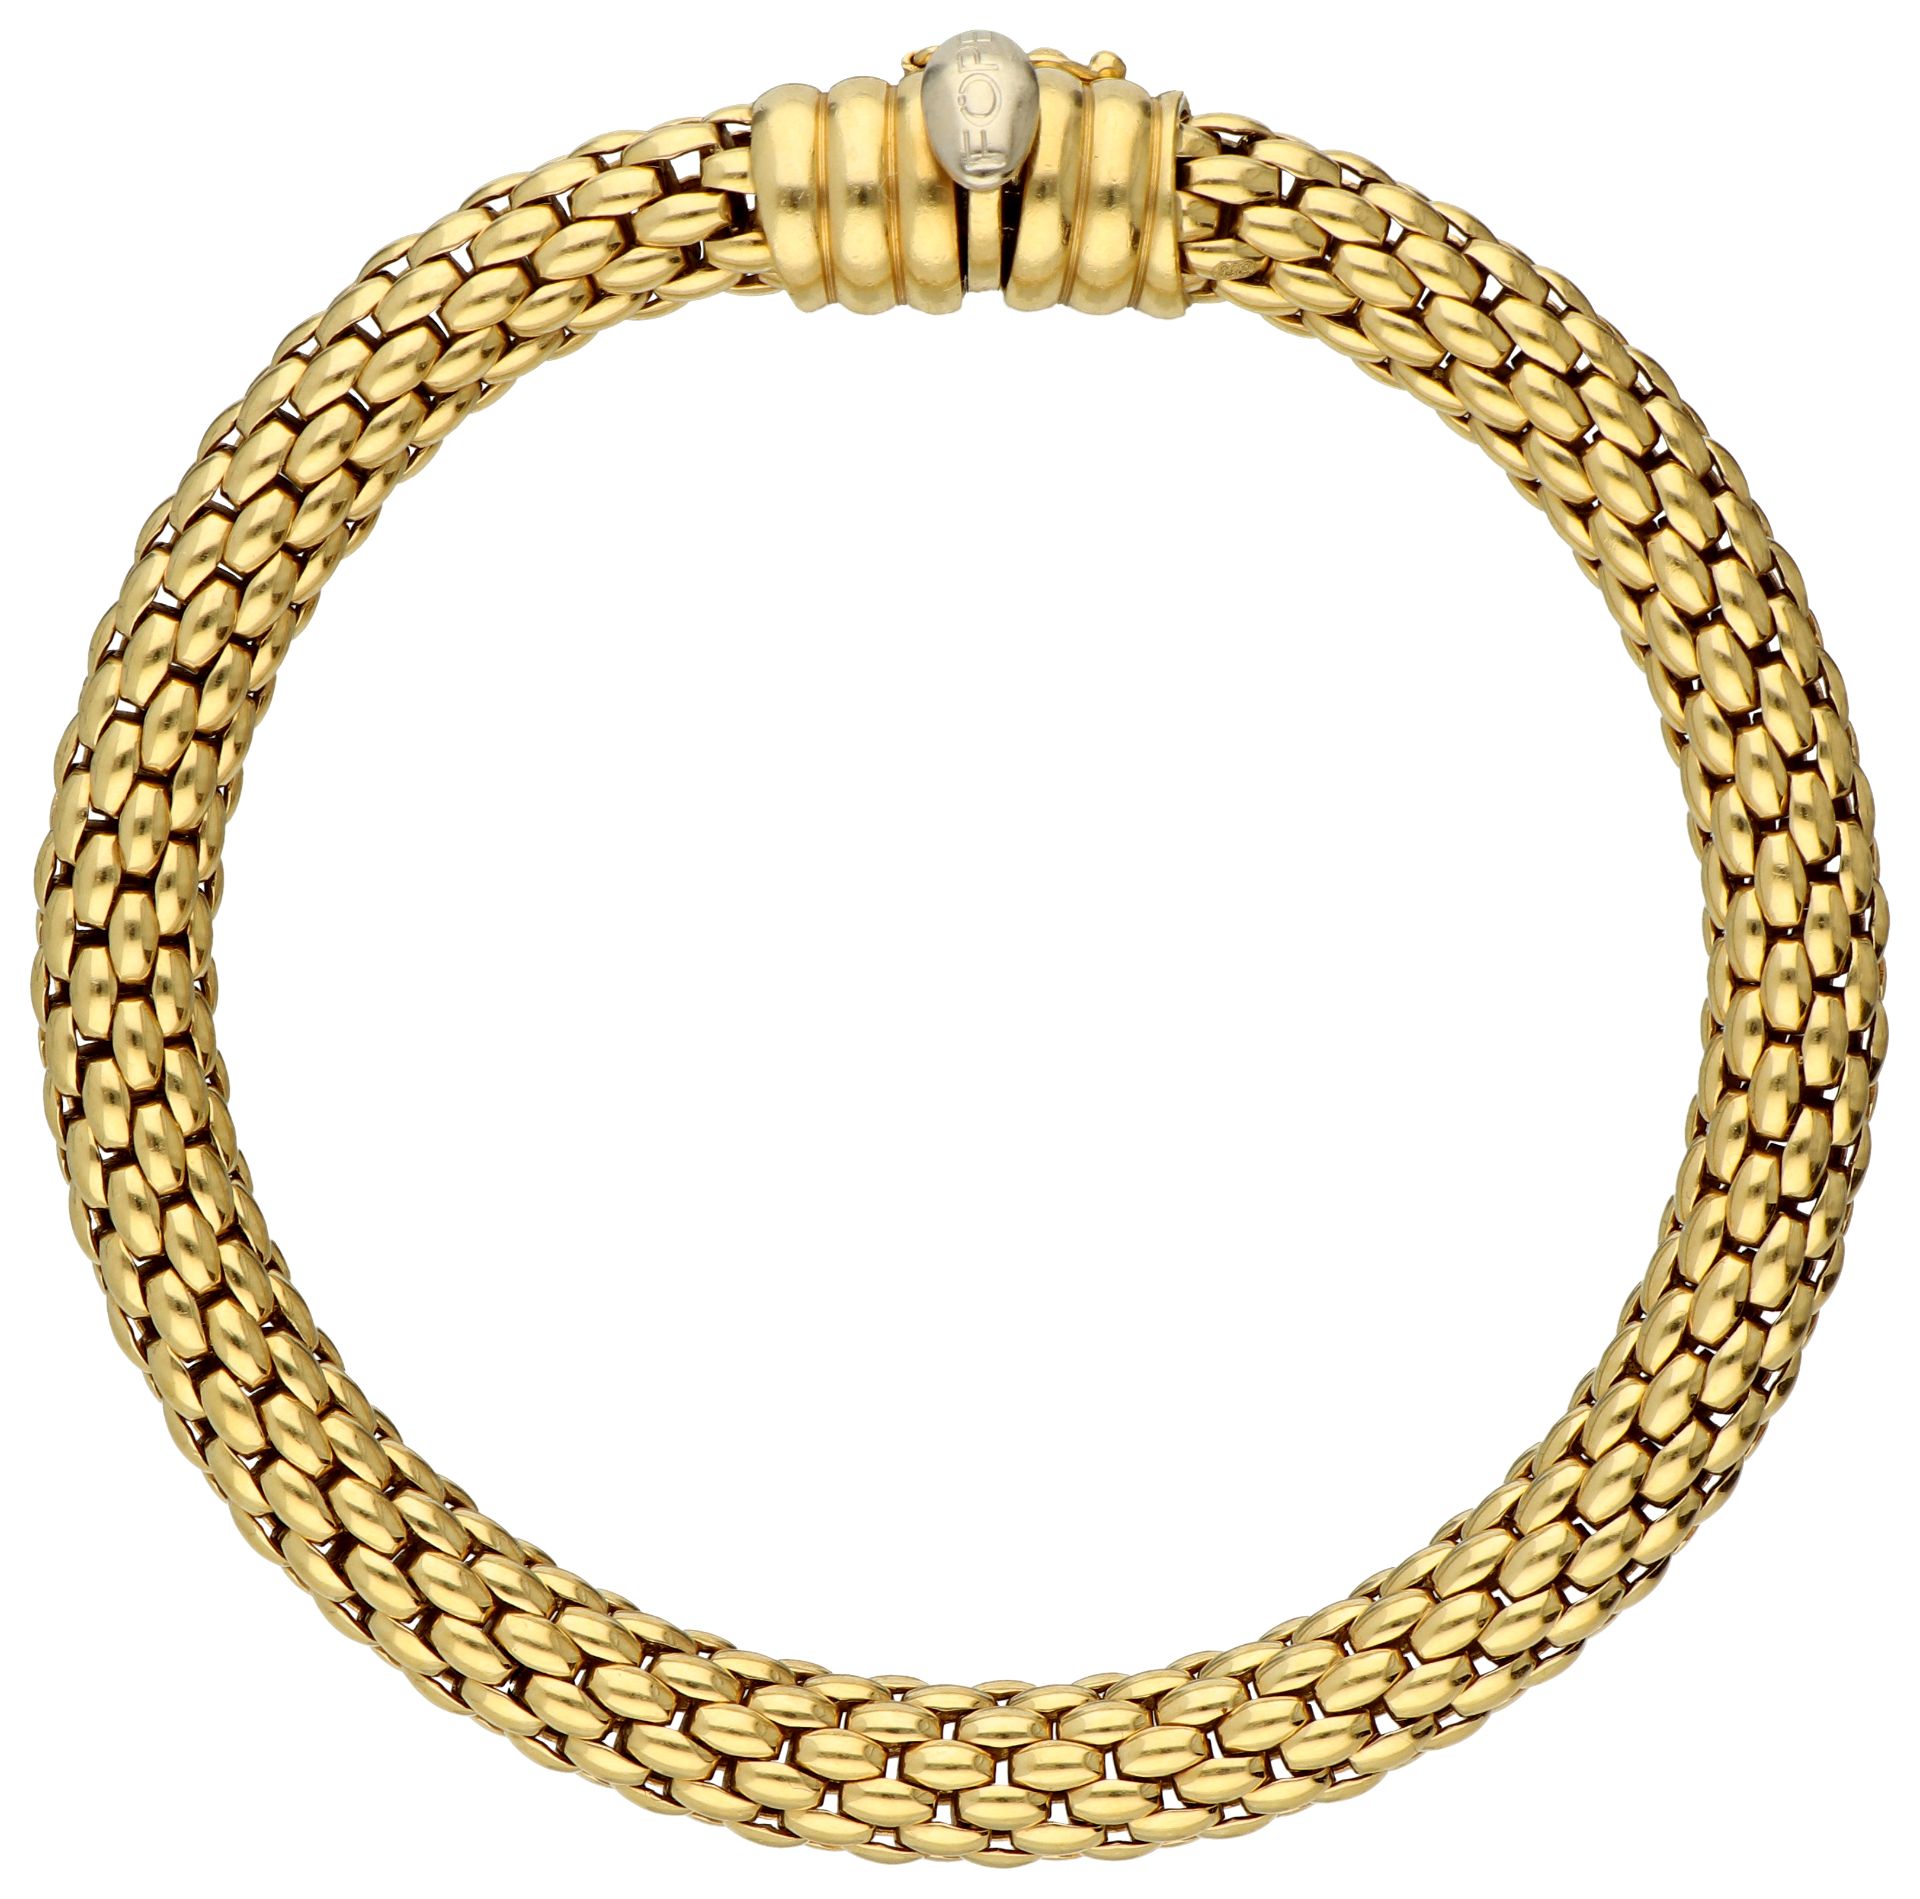 No Reserve - Fope 18K yellow gold mesh bracelet - Image 3 of 4